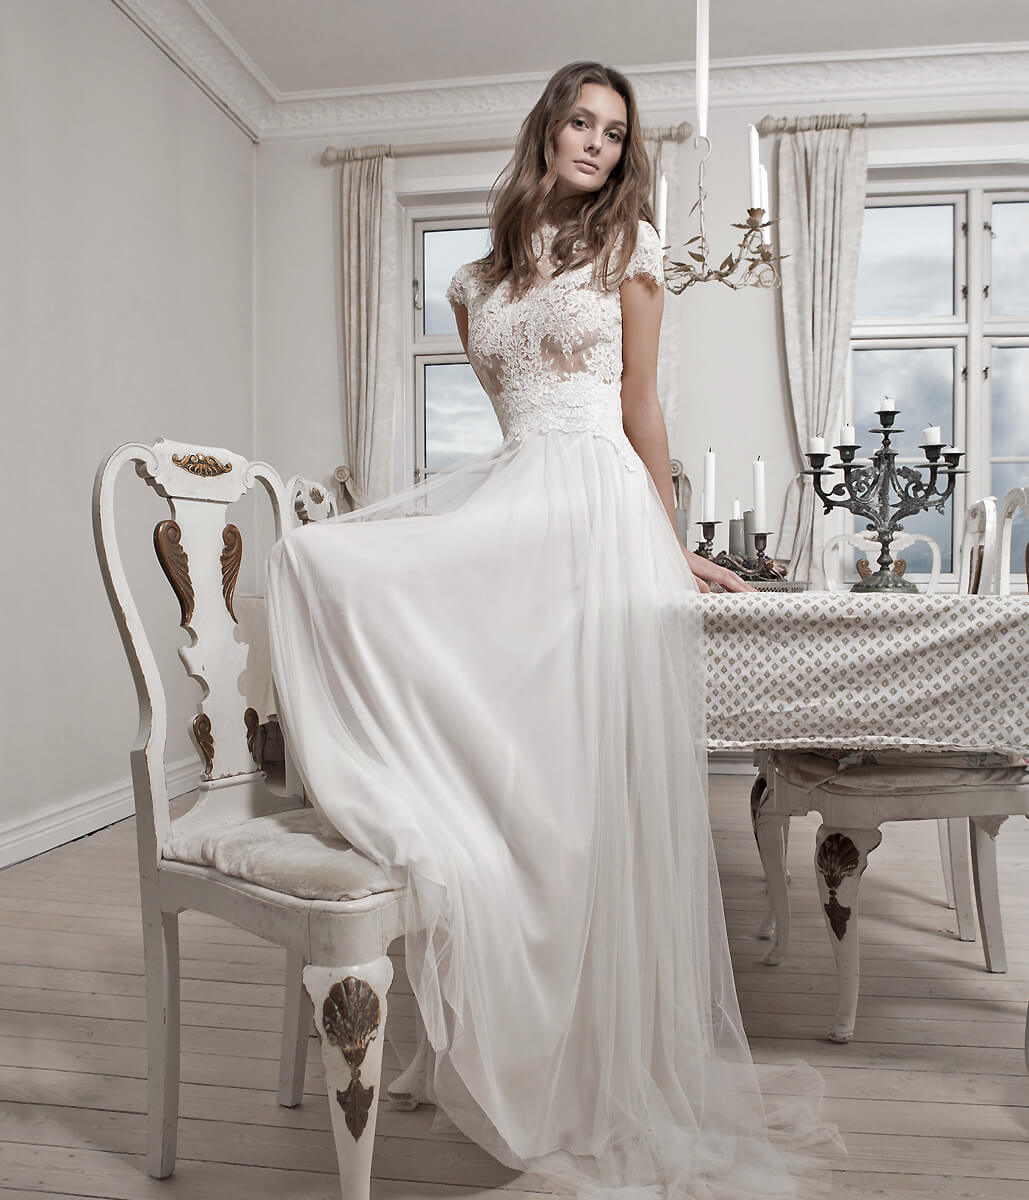 angelika dluzen weddingdress collection bridal